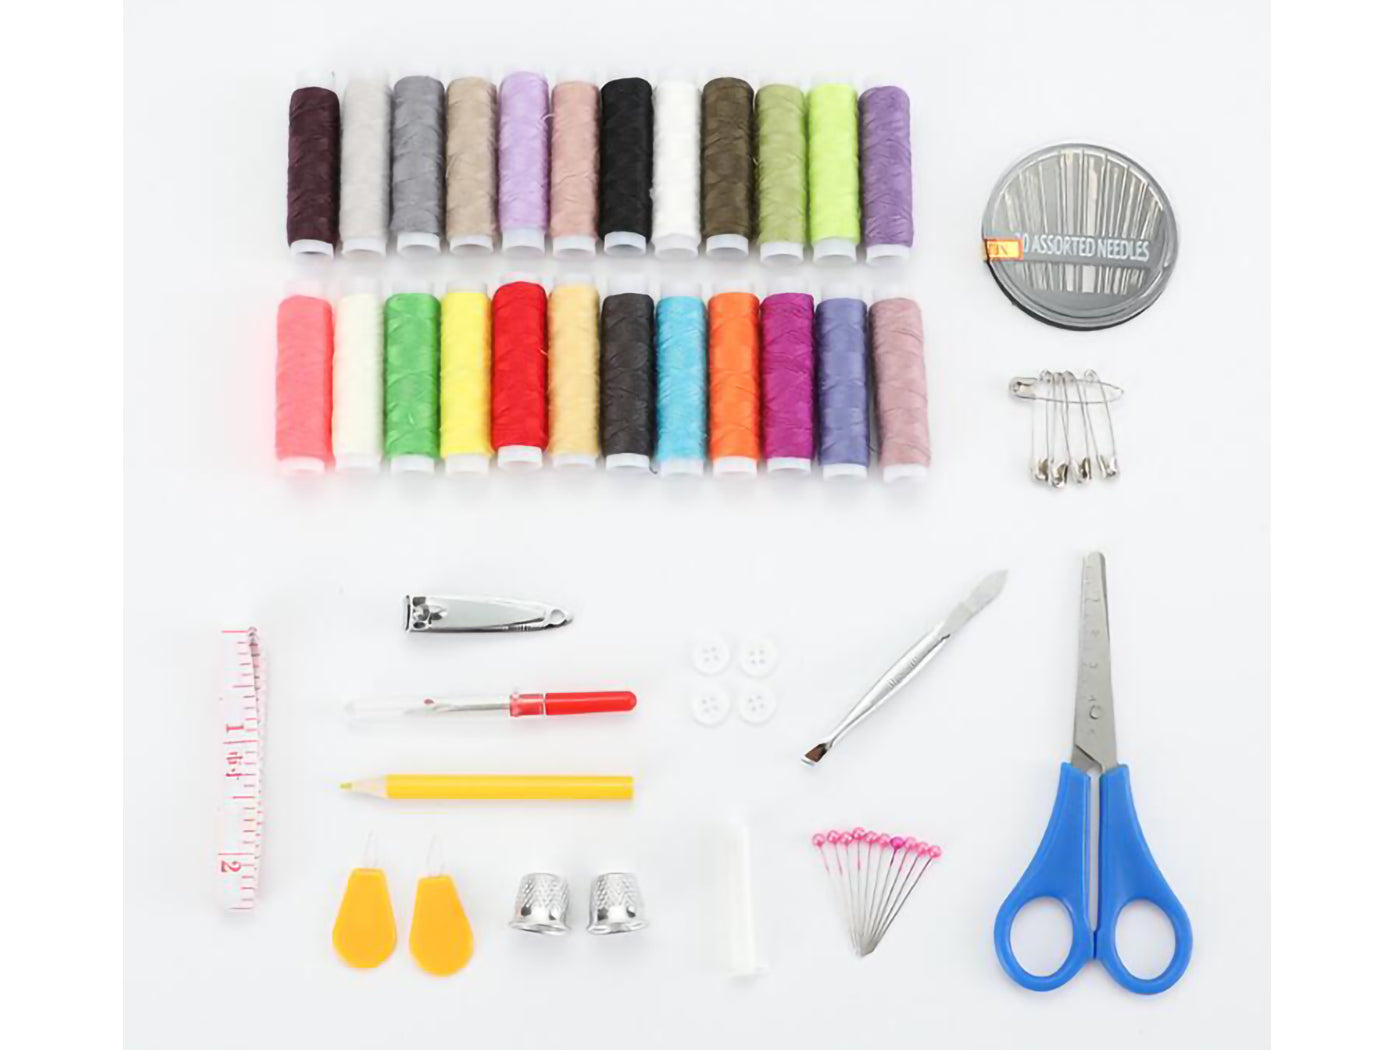 Sewing Kit for DIY Beginners | 46PCS Sewing Kit